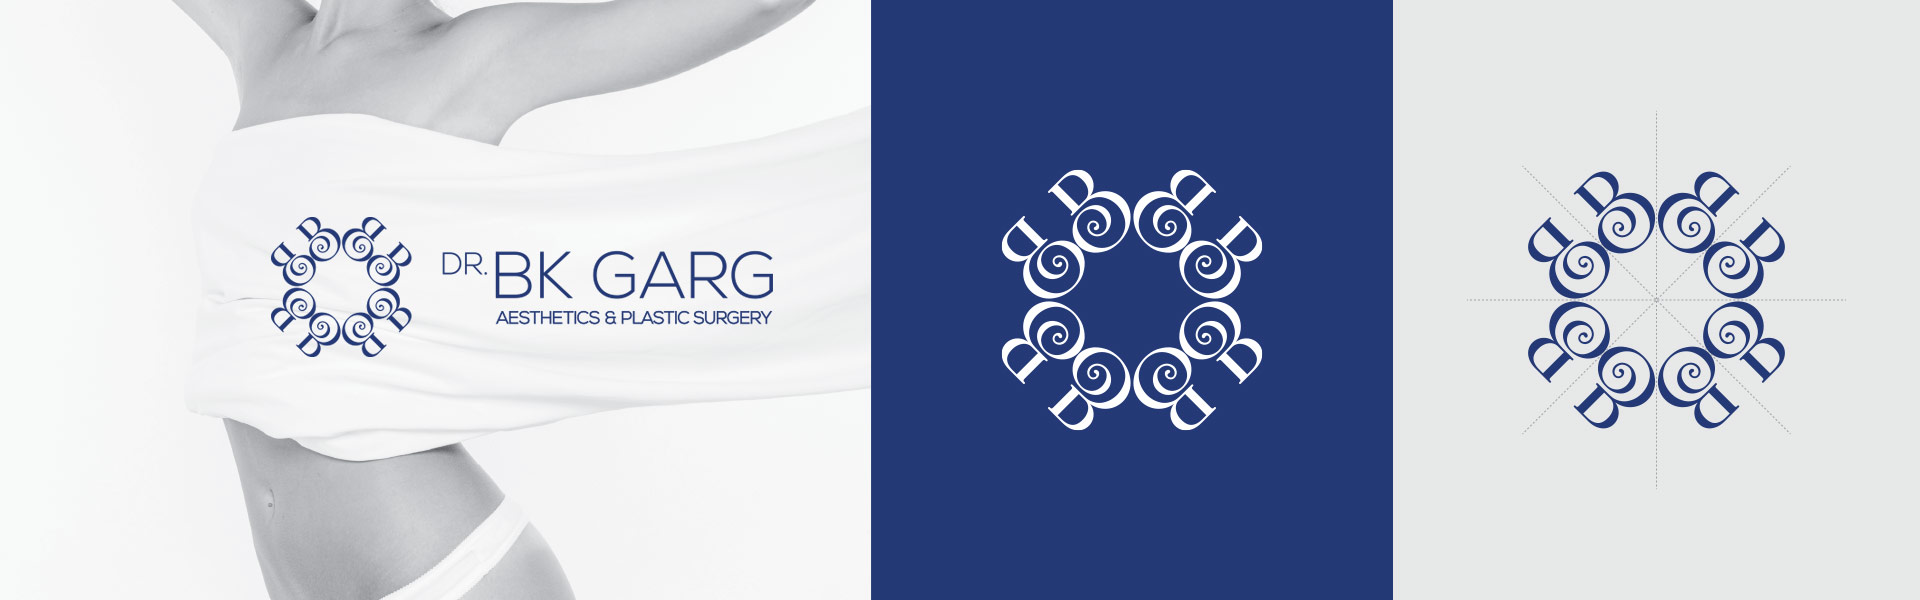 Dr. BK Garg - Aesthetics & Plastic Surgery logo design